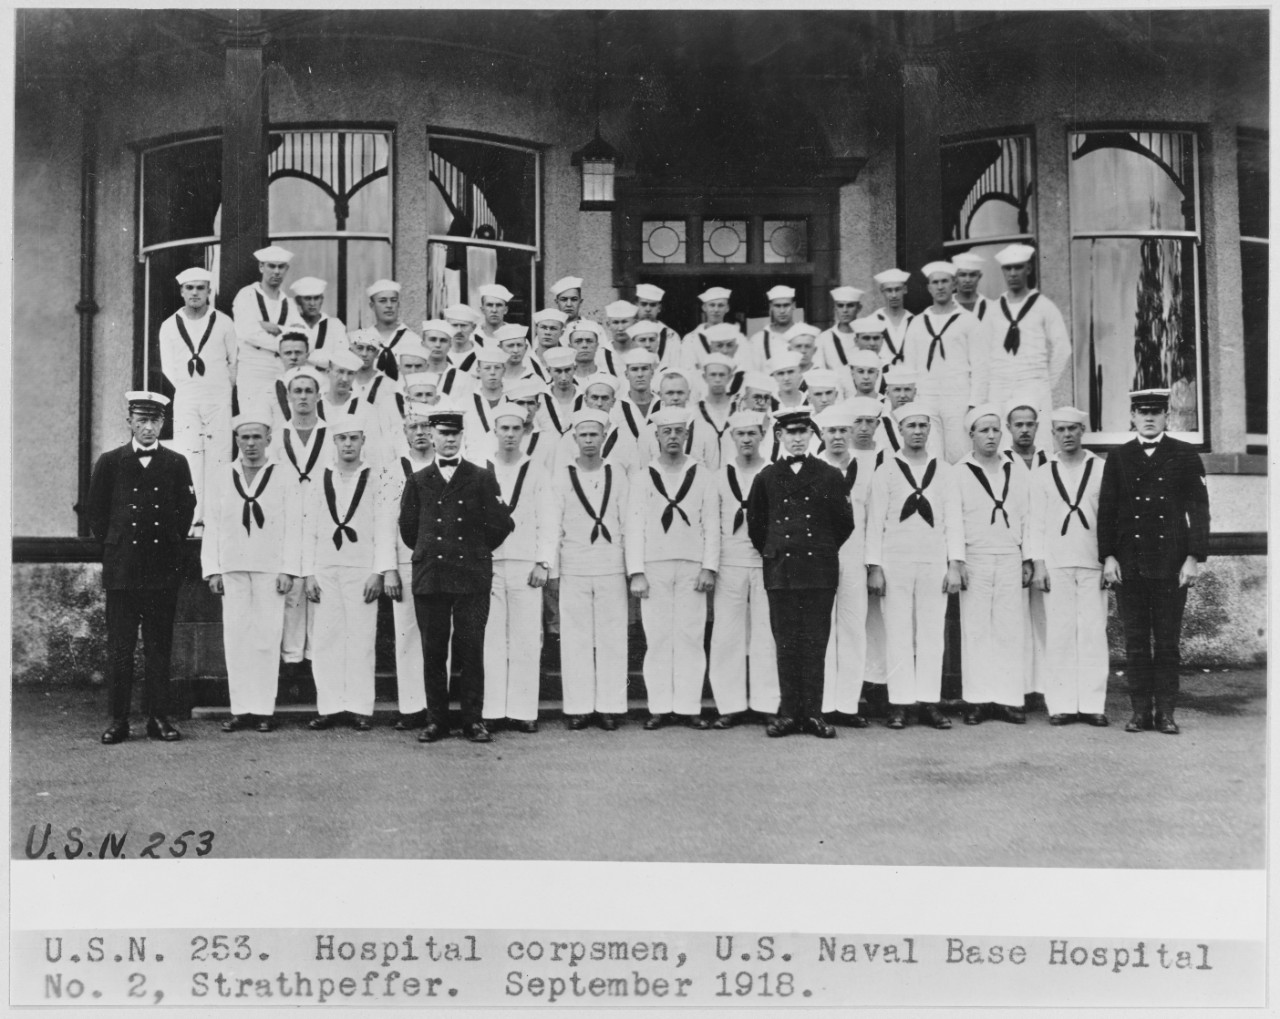 Hospital Corpsmen portrait at U.S. Naval Base Hospital in Scotland, September, 1918